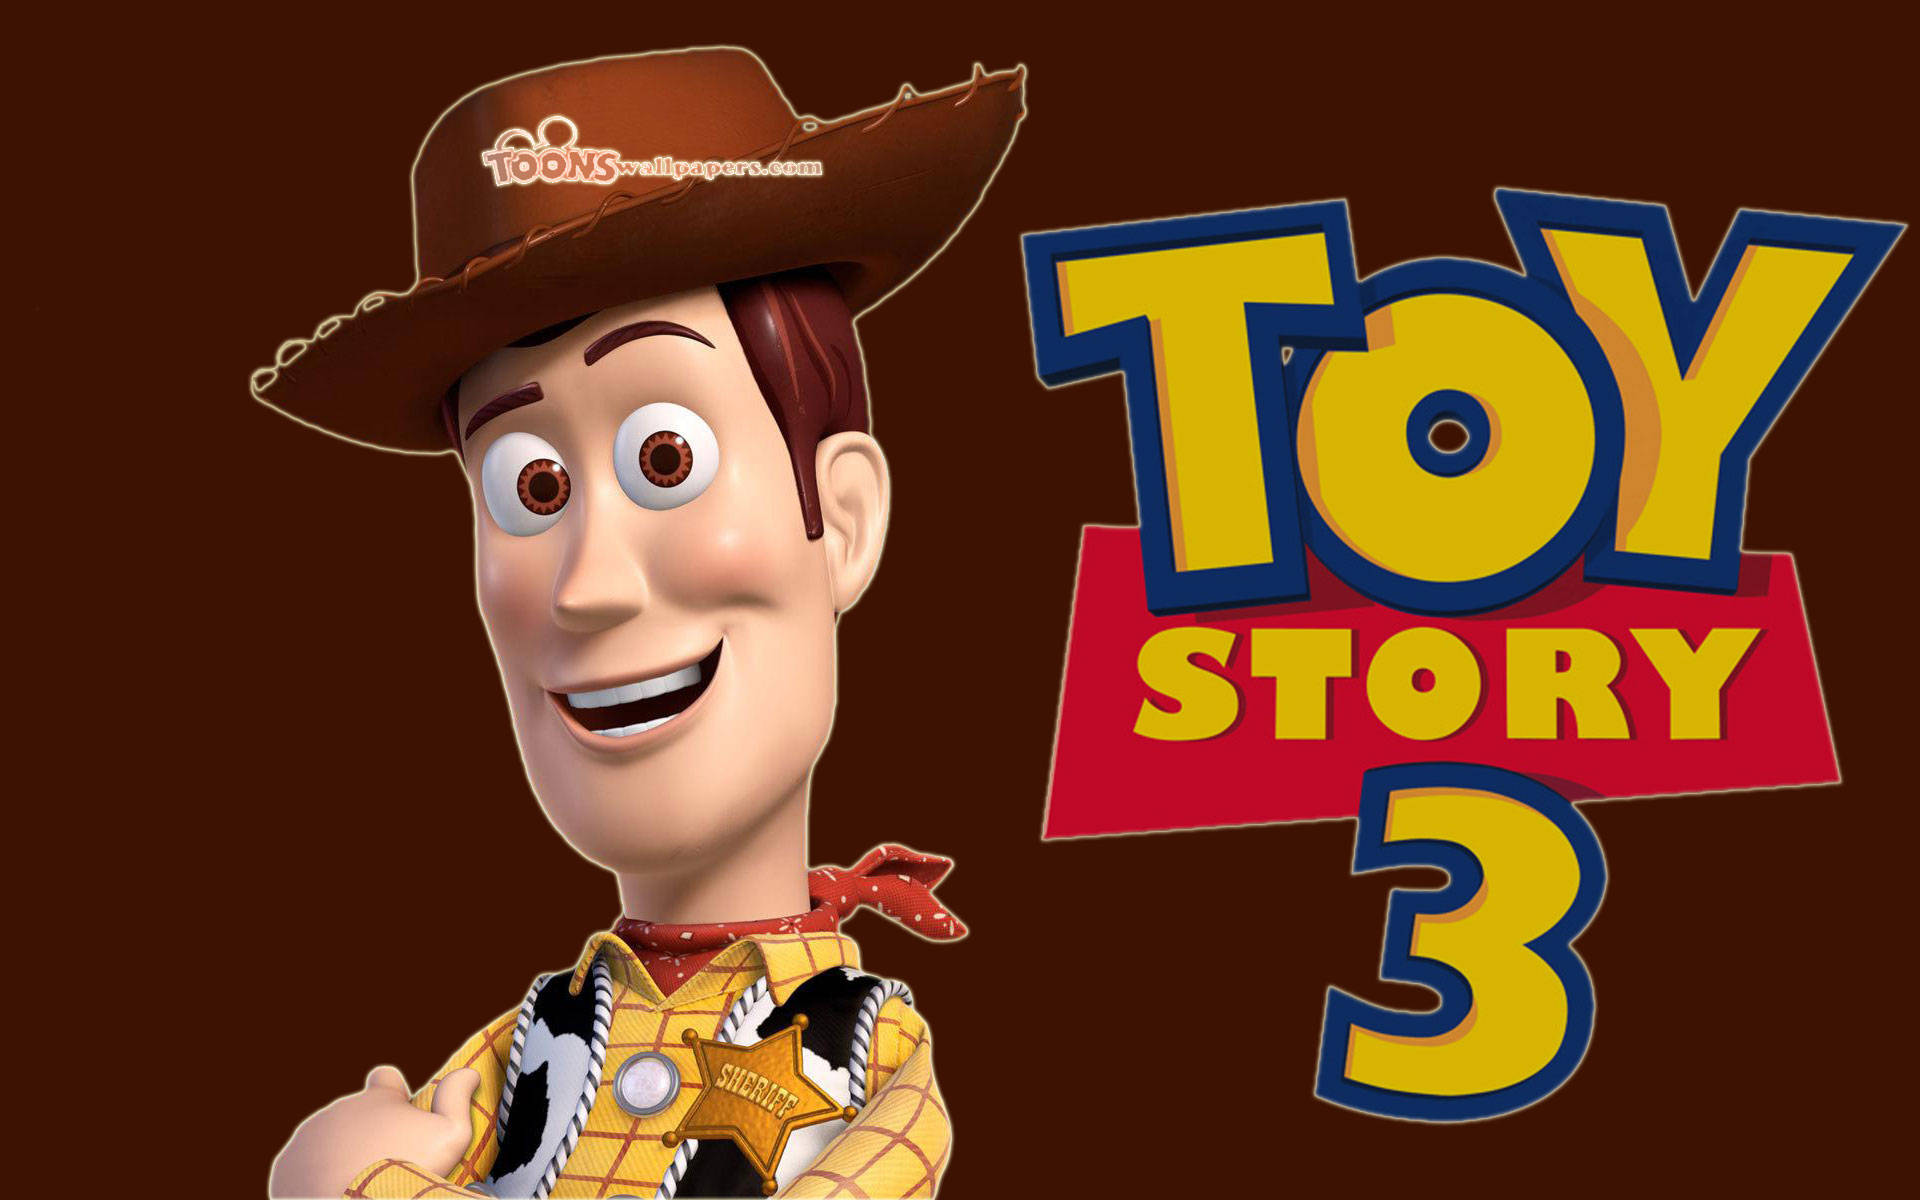 Toy Story 3 Cowboy Woody tema baggrunden. Wallpaper